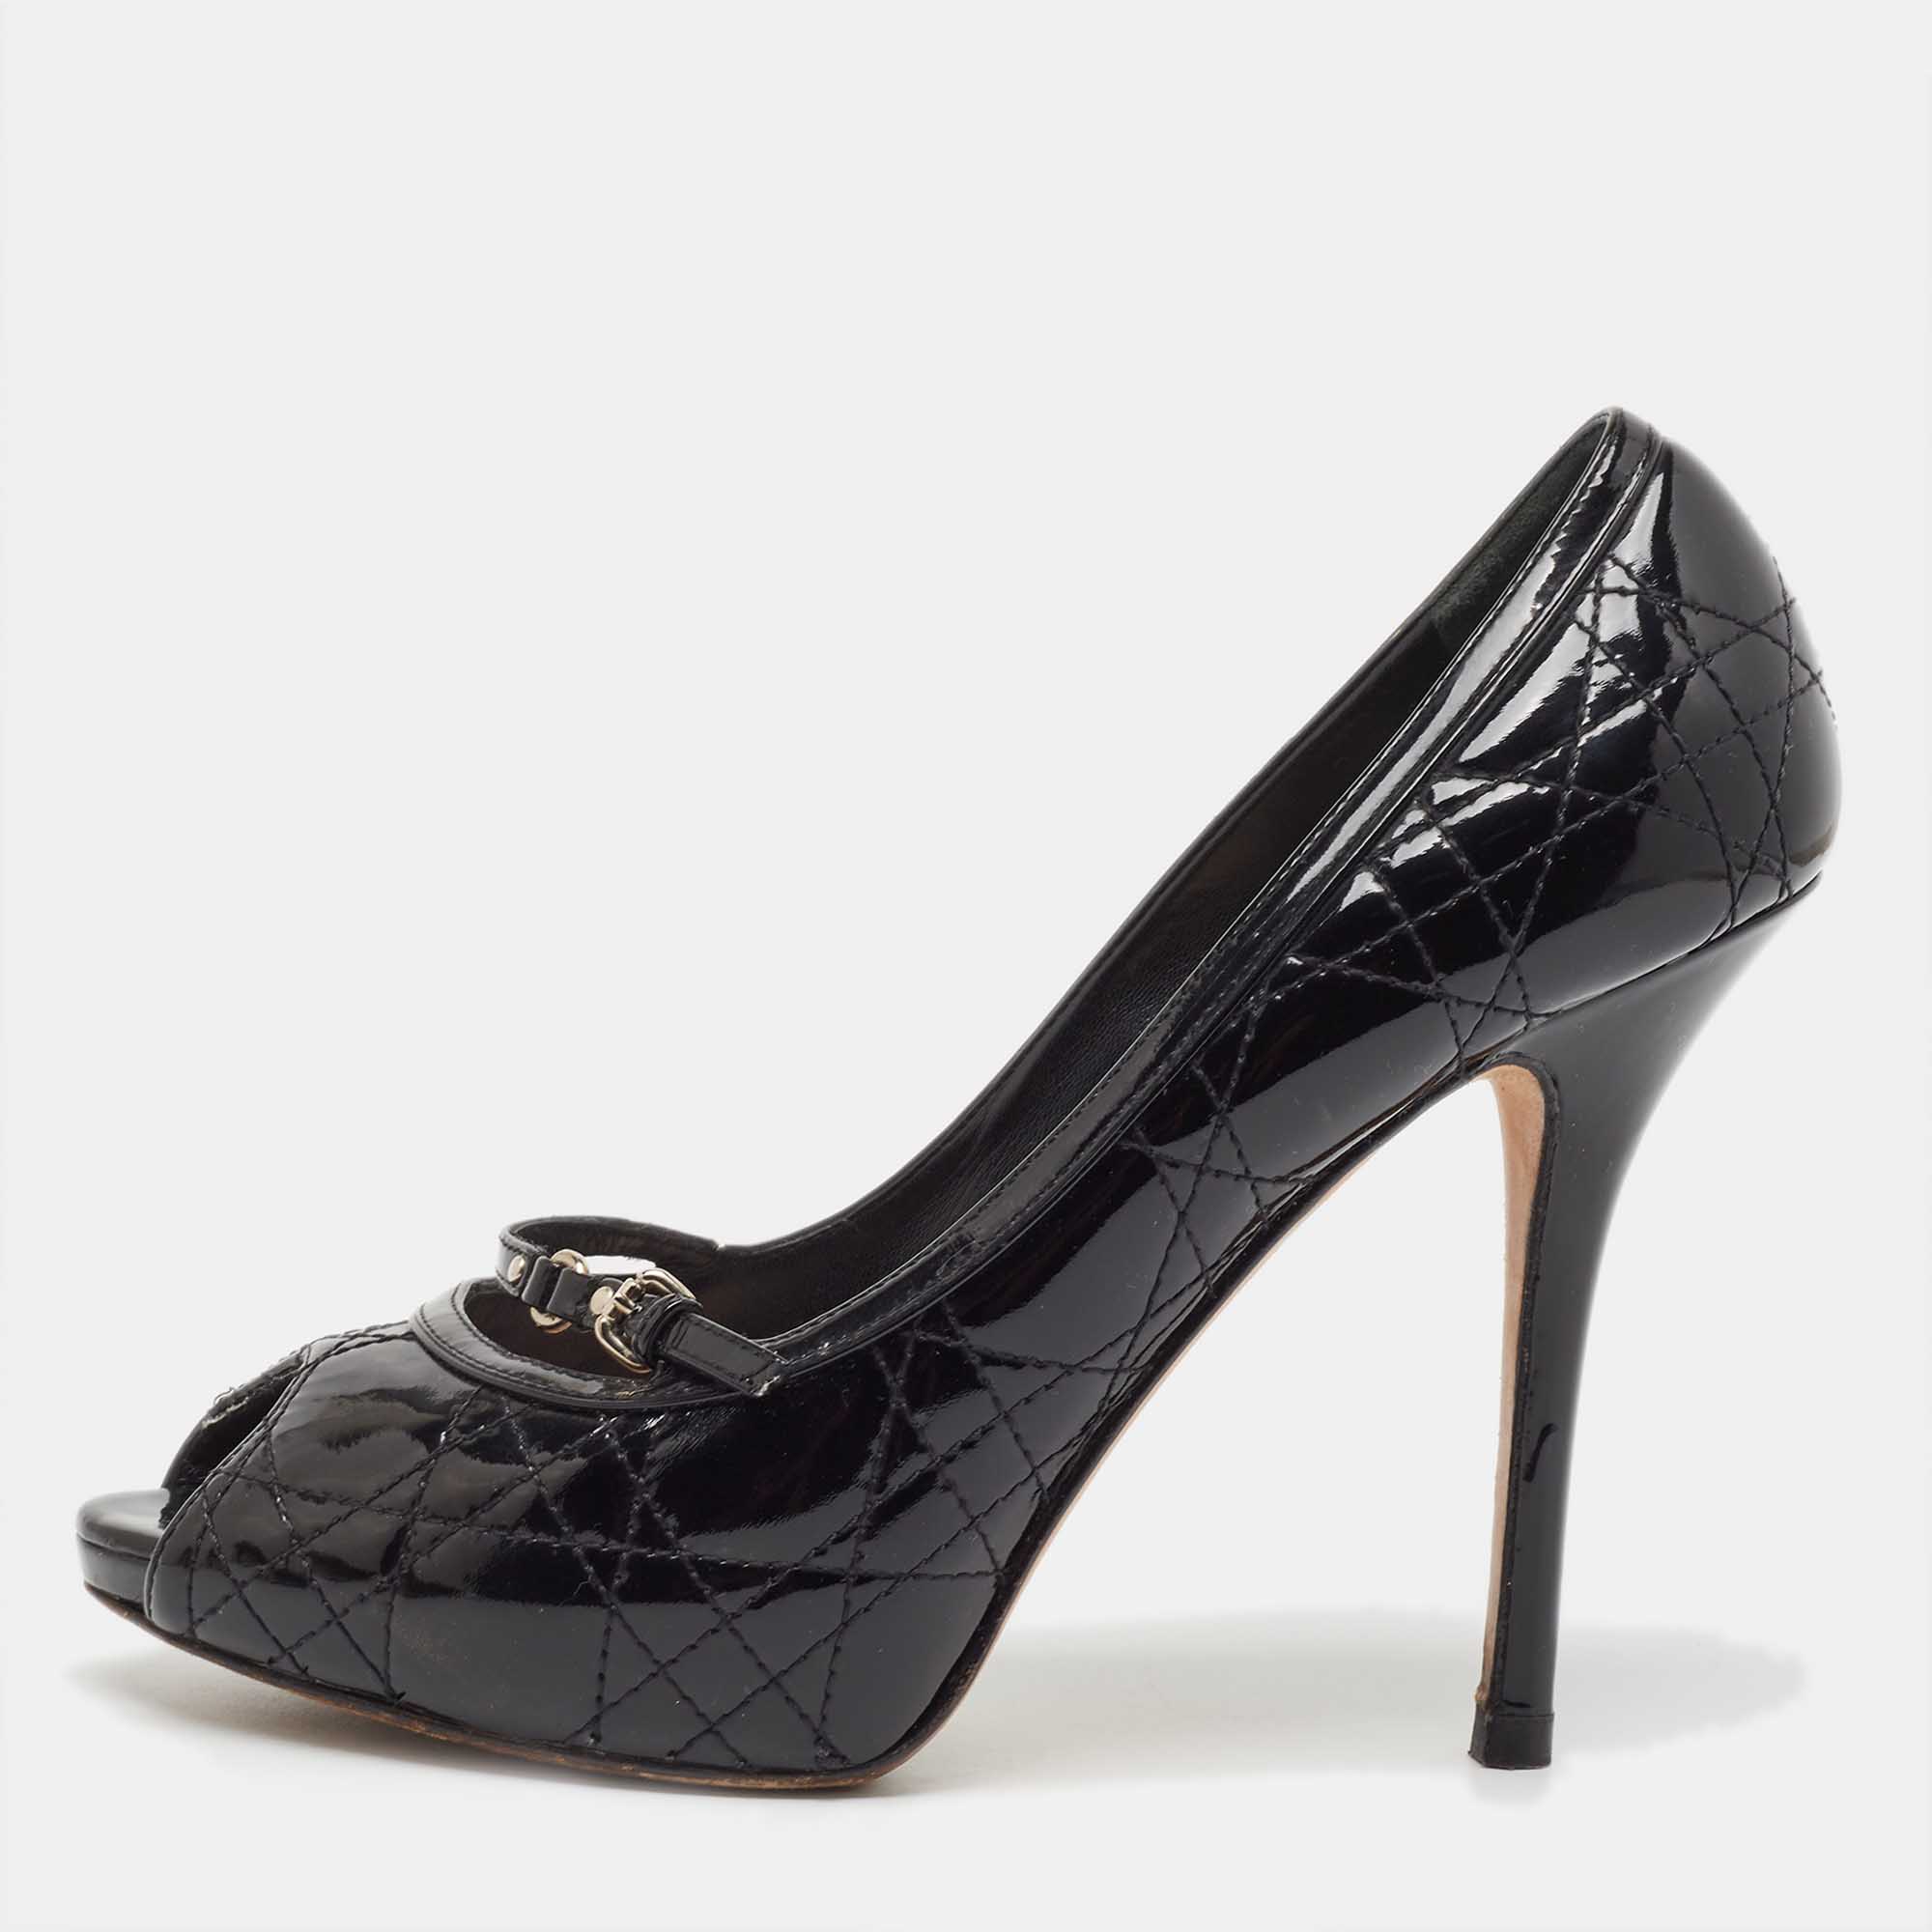 Dior black cannage patent leather peep toe platform pumps size 40